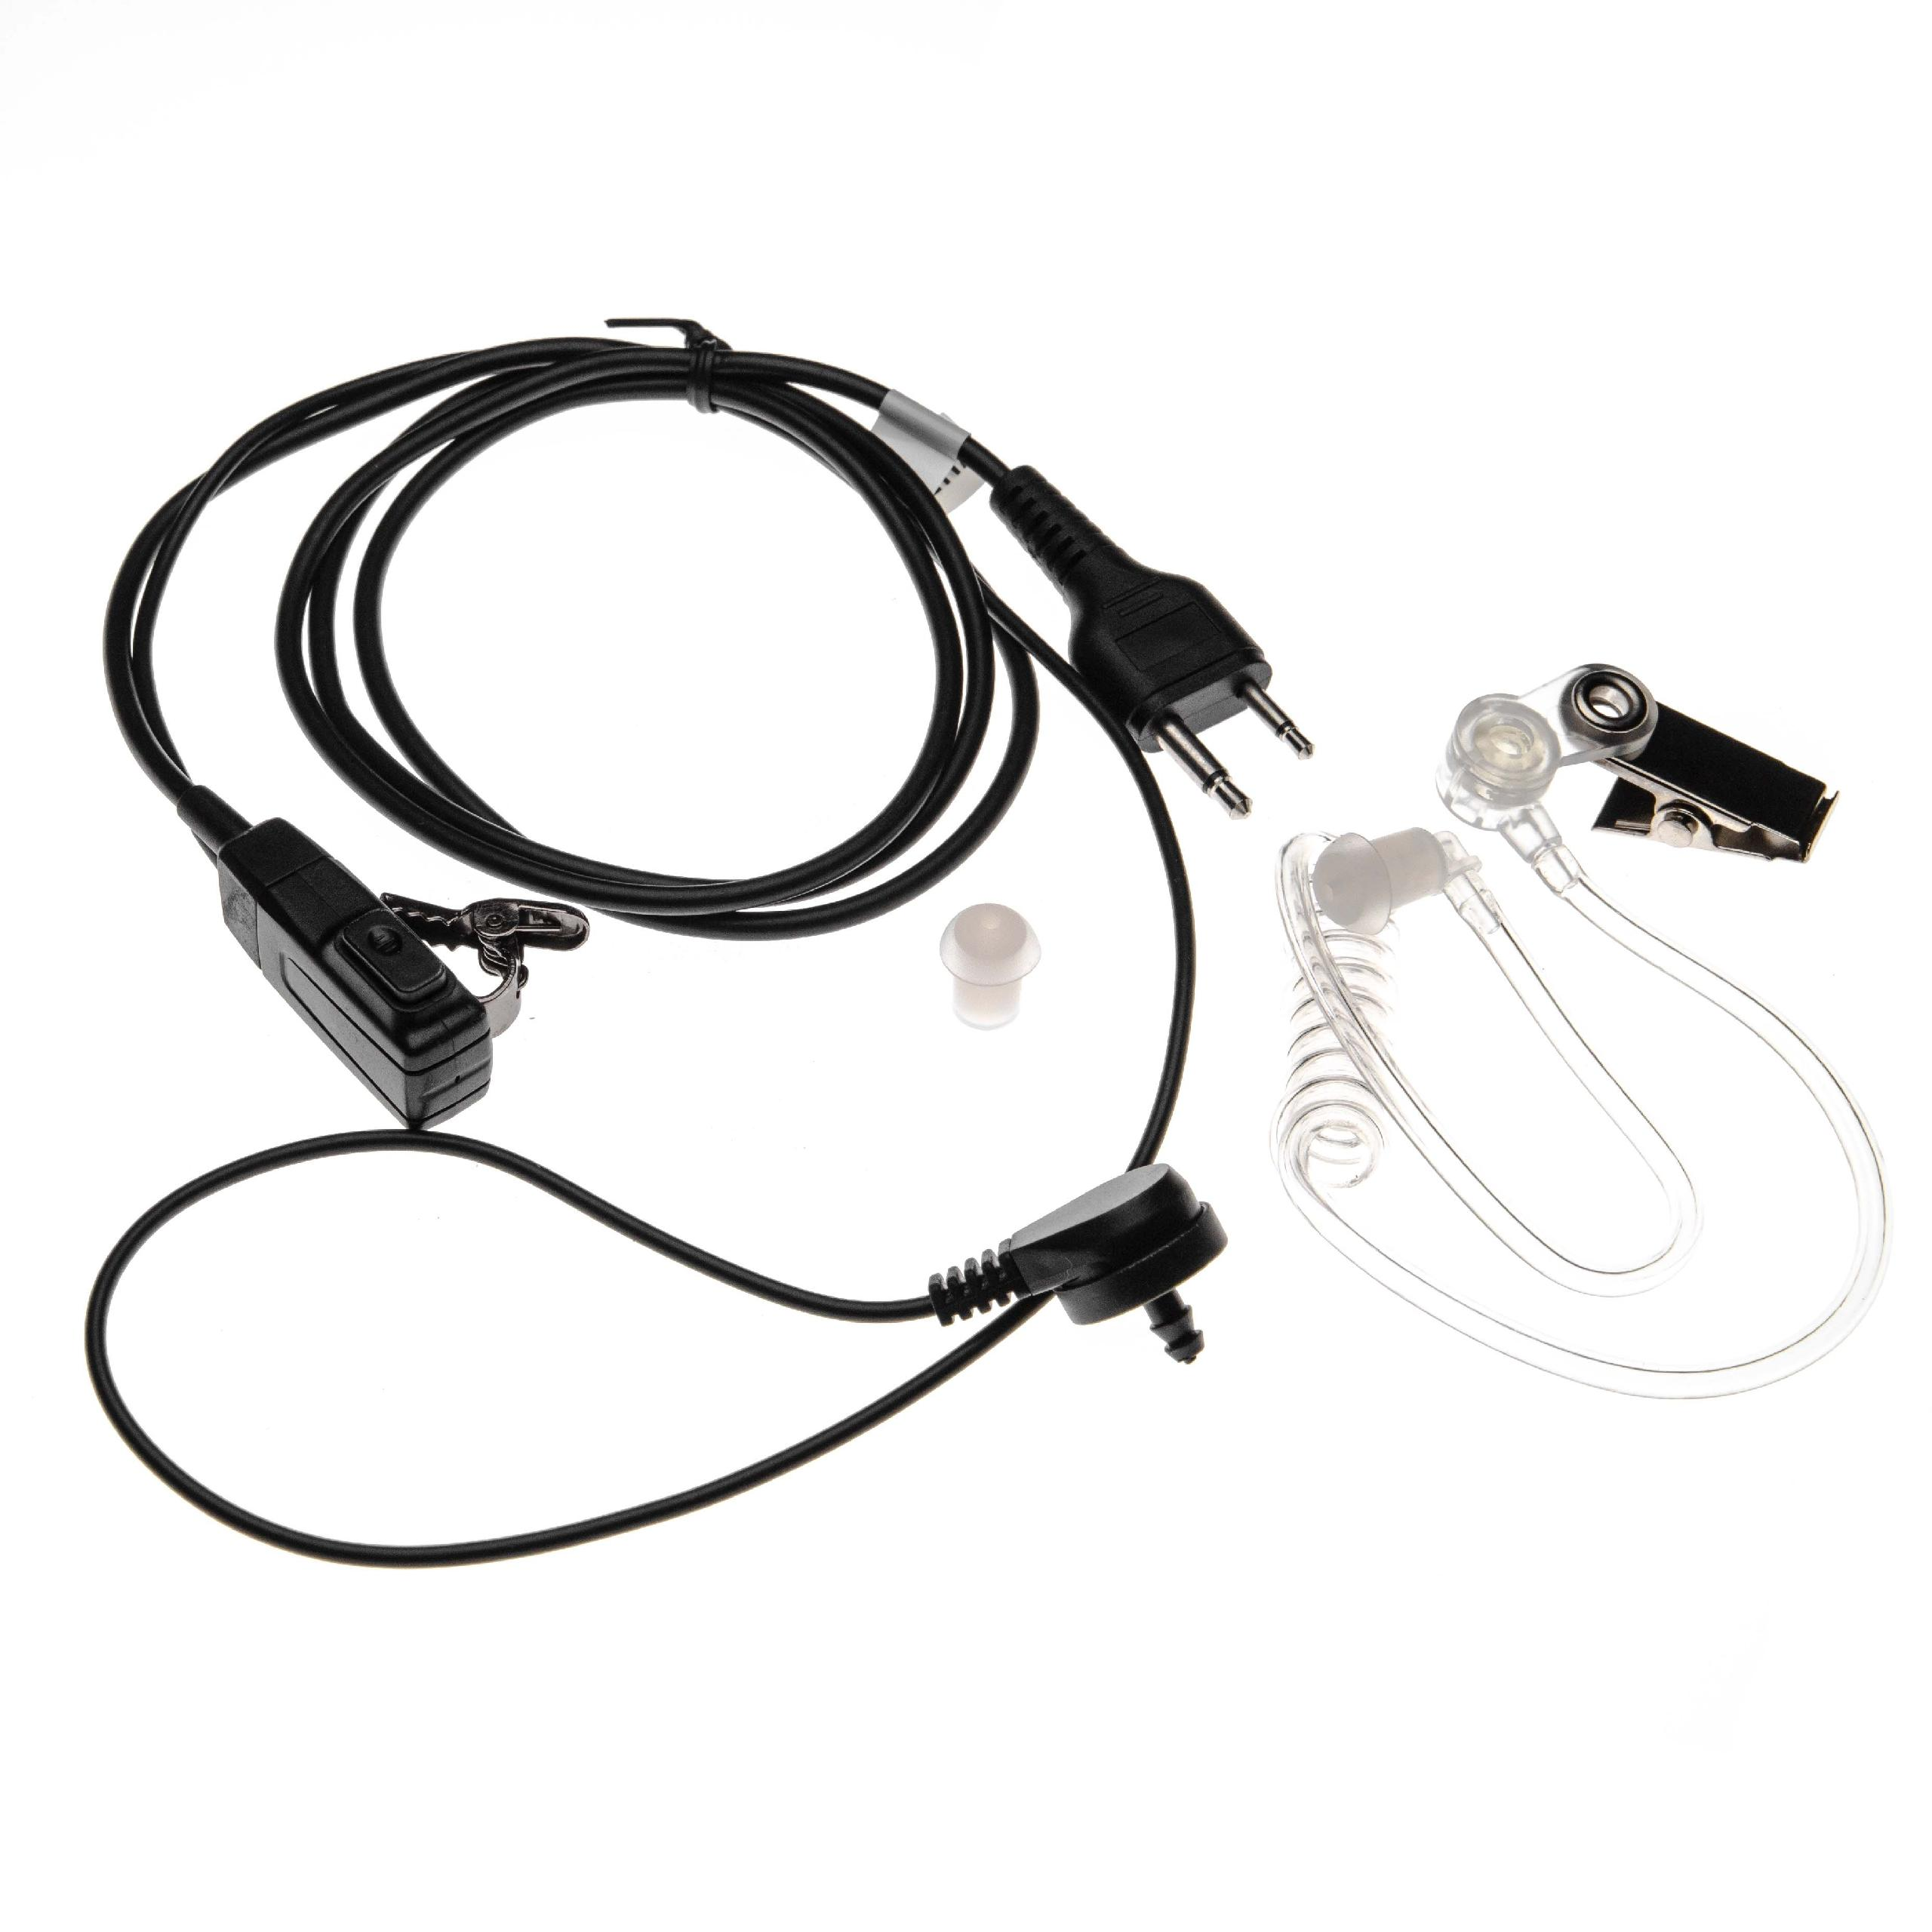 VHBW kompatibel mit Icom On-ear IC-T22, Headset schwarz IC-T2A, IC-T21CP, / IC-T2, IC-T22E, IC-T2E, transparent IC-T21A, IC-T21E, IC-T22A